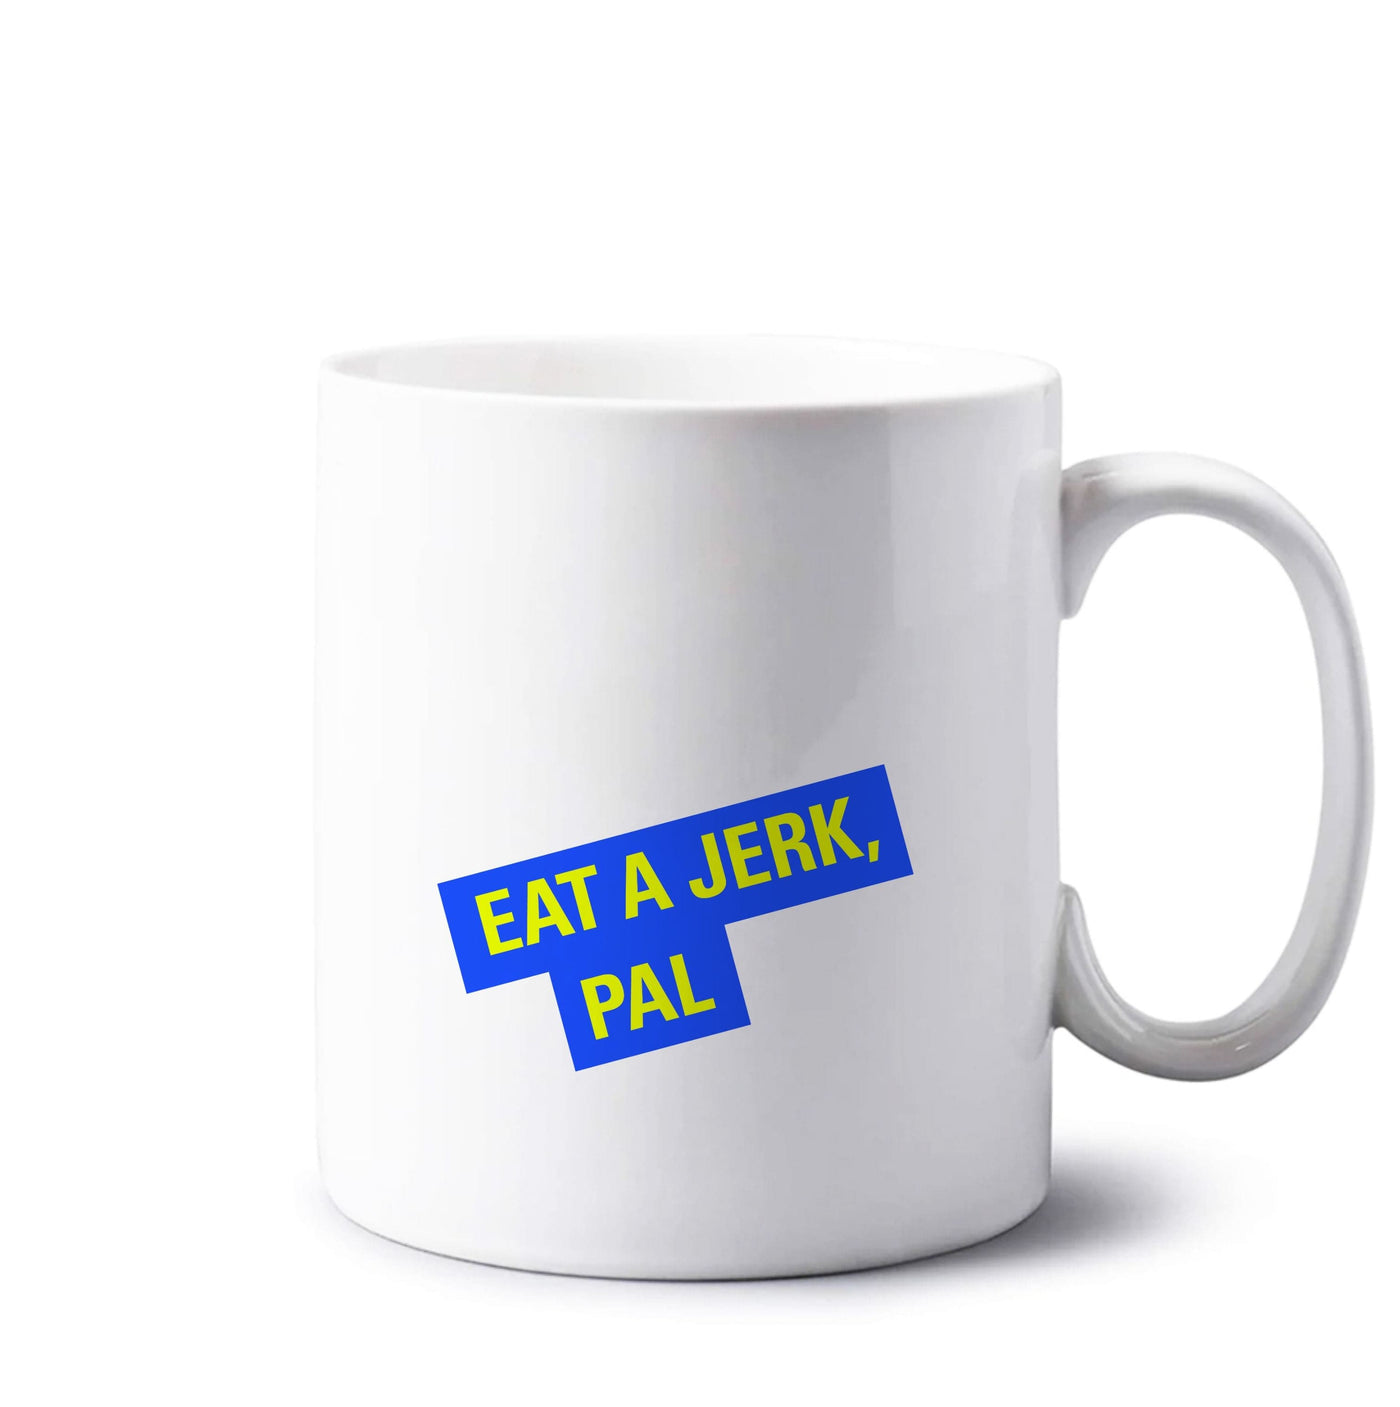 Eat A jerk, Pal - Brooklyn Nine-Nine Mug